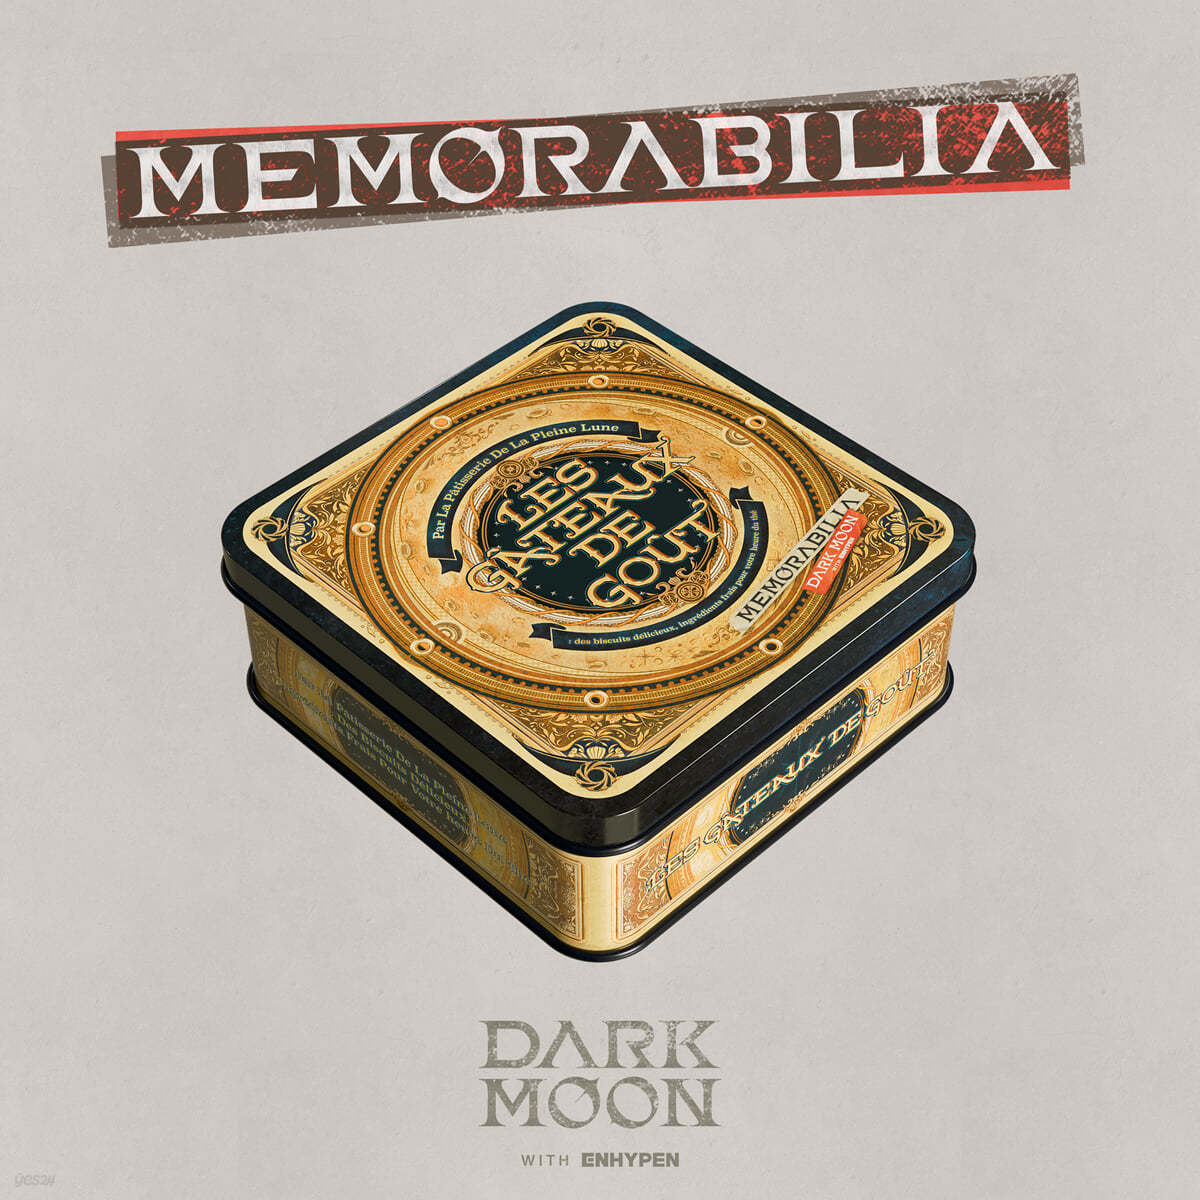 ENHYPEN – DARK MOON SPECIAL ALBUM [MEMORABILIA] (Moon Ver.) + Weverse, KKANG Gift